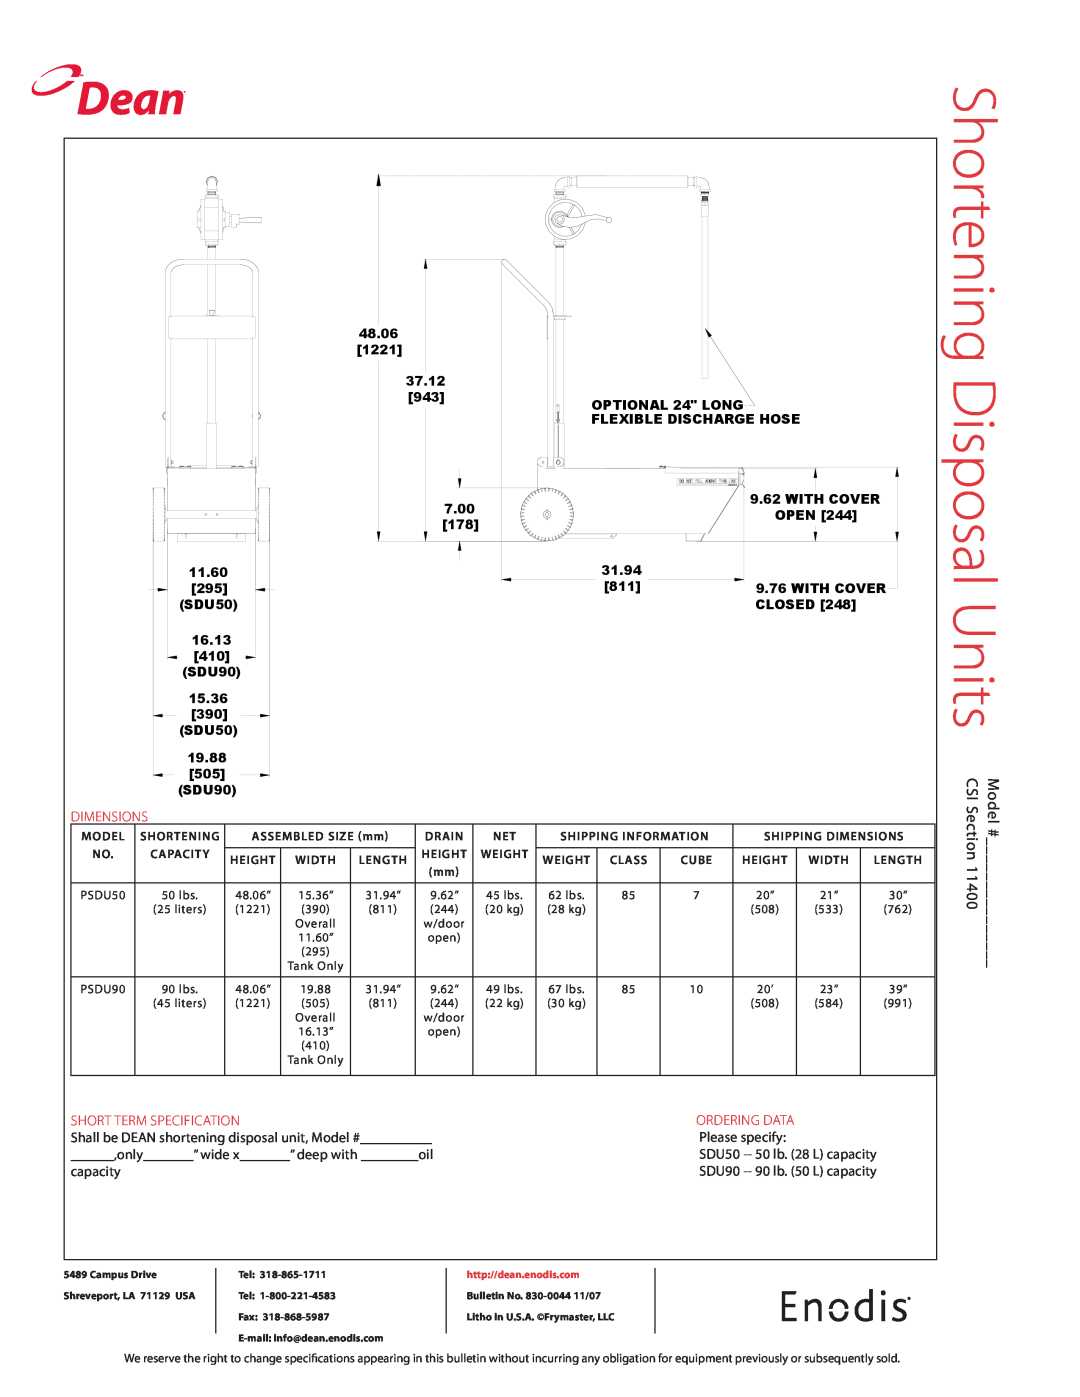 Teac SDU90 Disposal Units Model, Shortening, Dean, dimensions, short term specification, Ordering Data, Please specify 